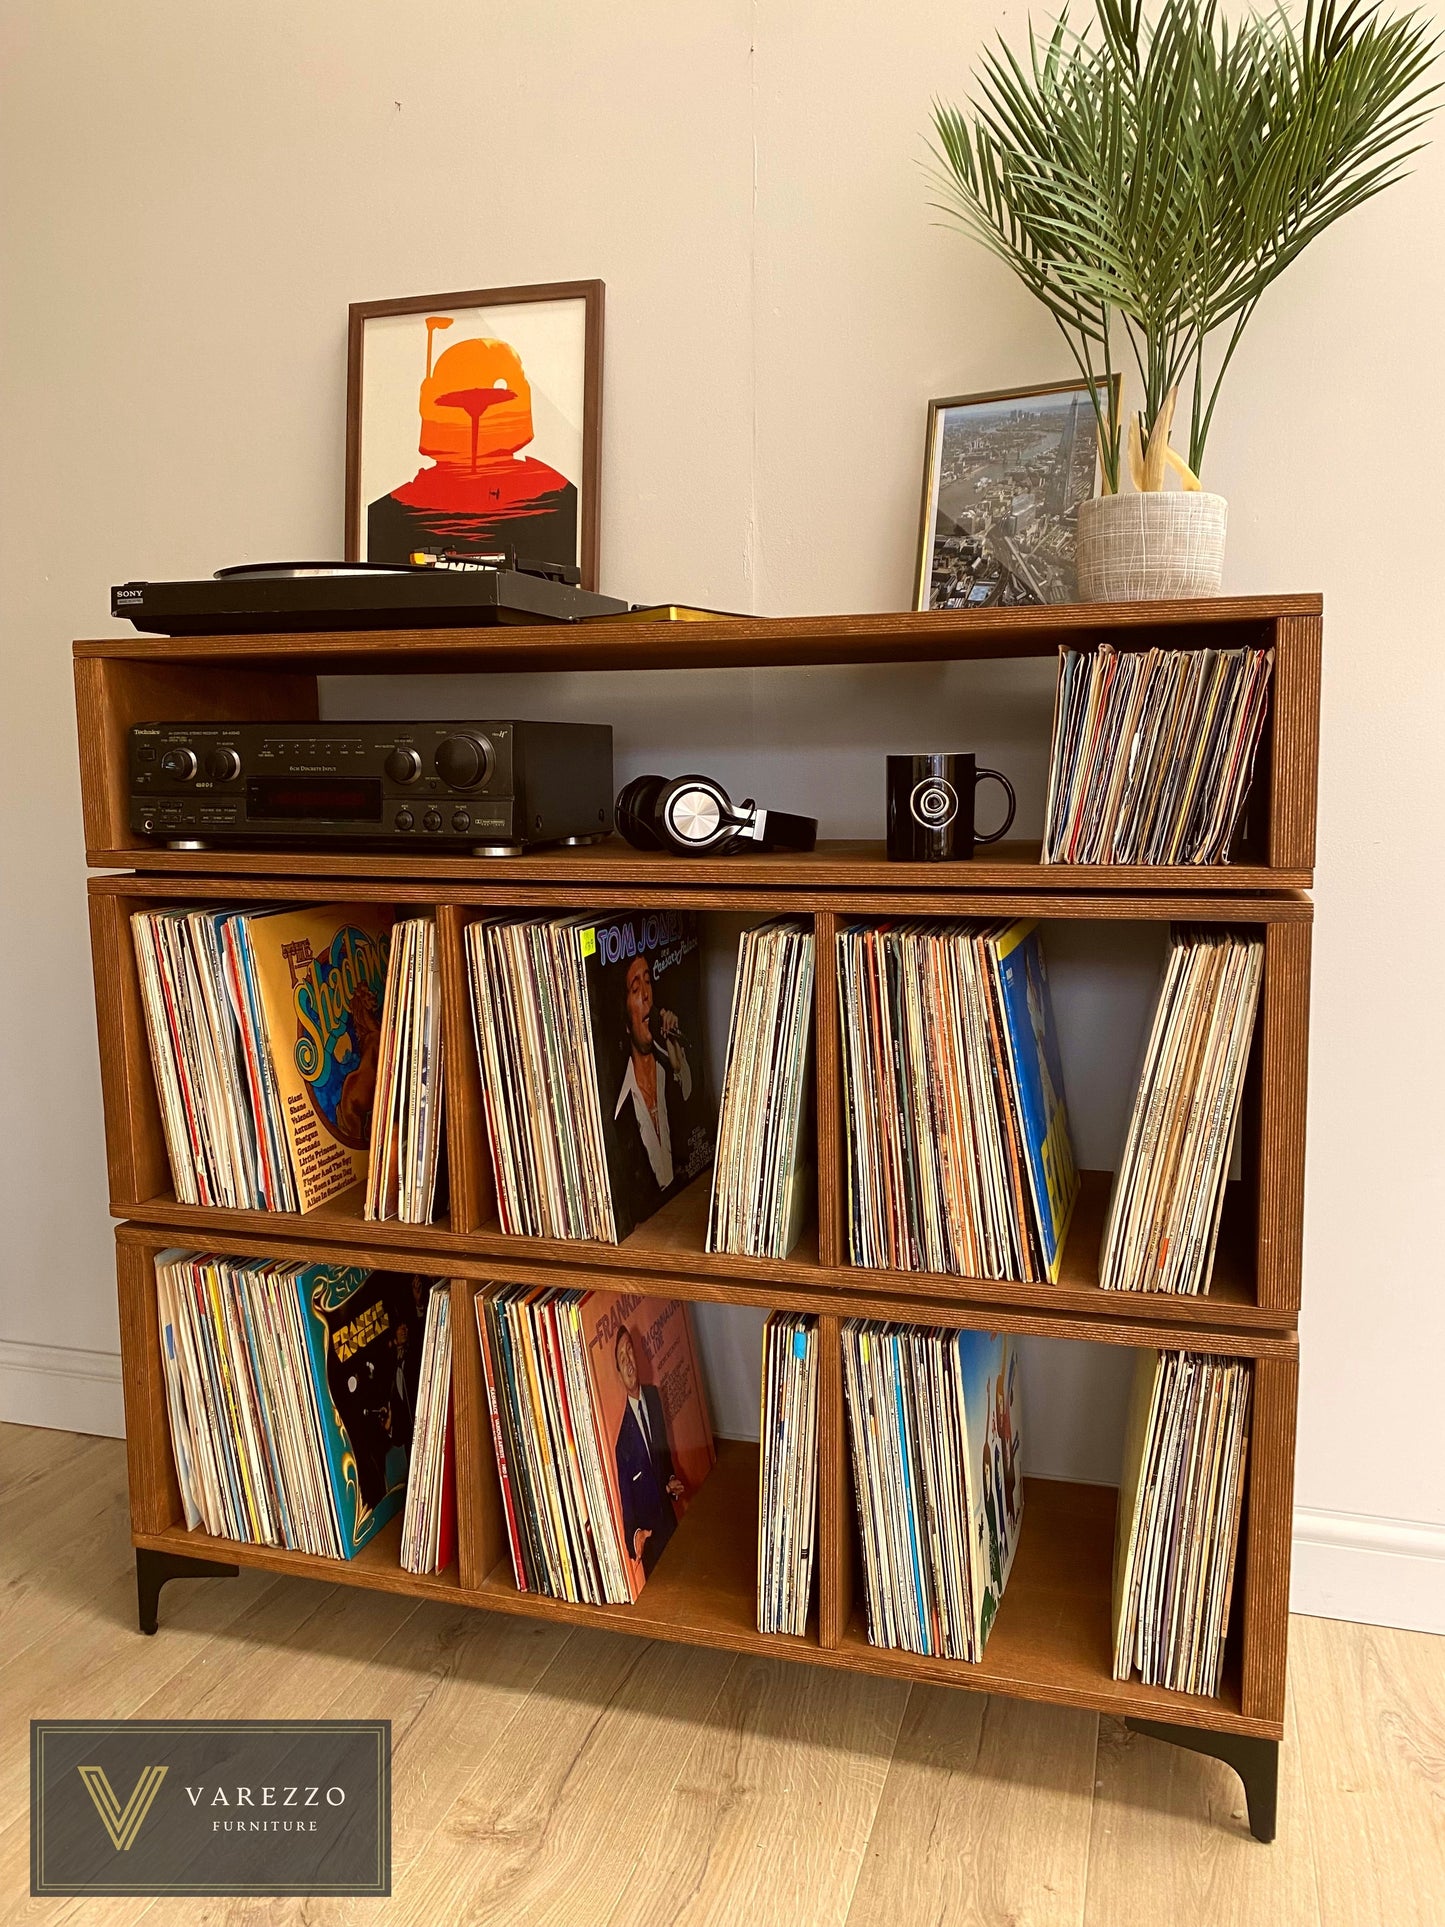 Varezzo Venezia | Record Player Stand | Vinyl Record Storage | Turntable Stand